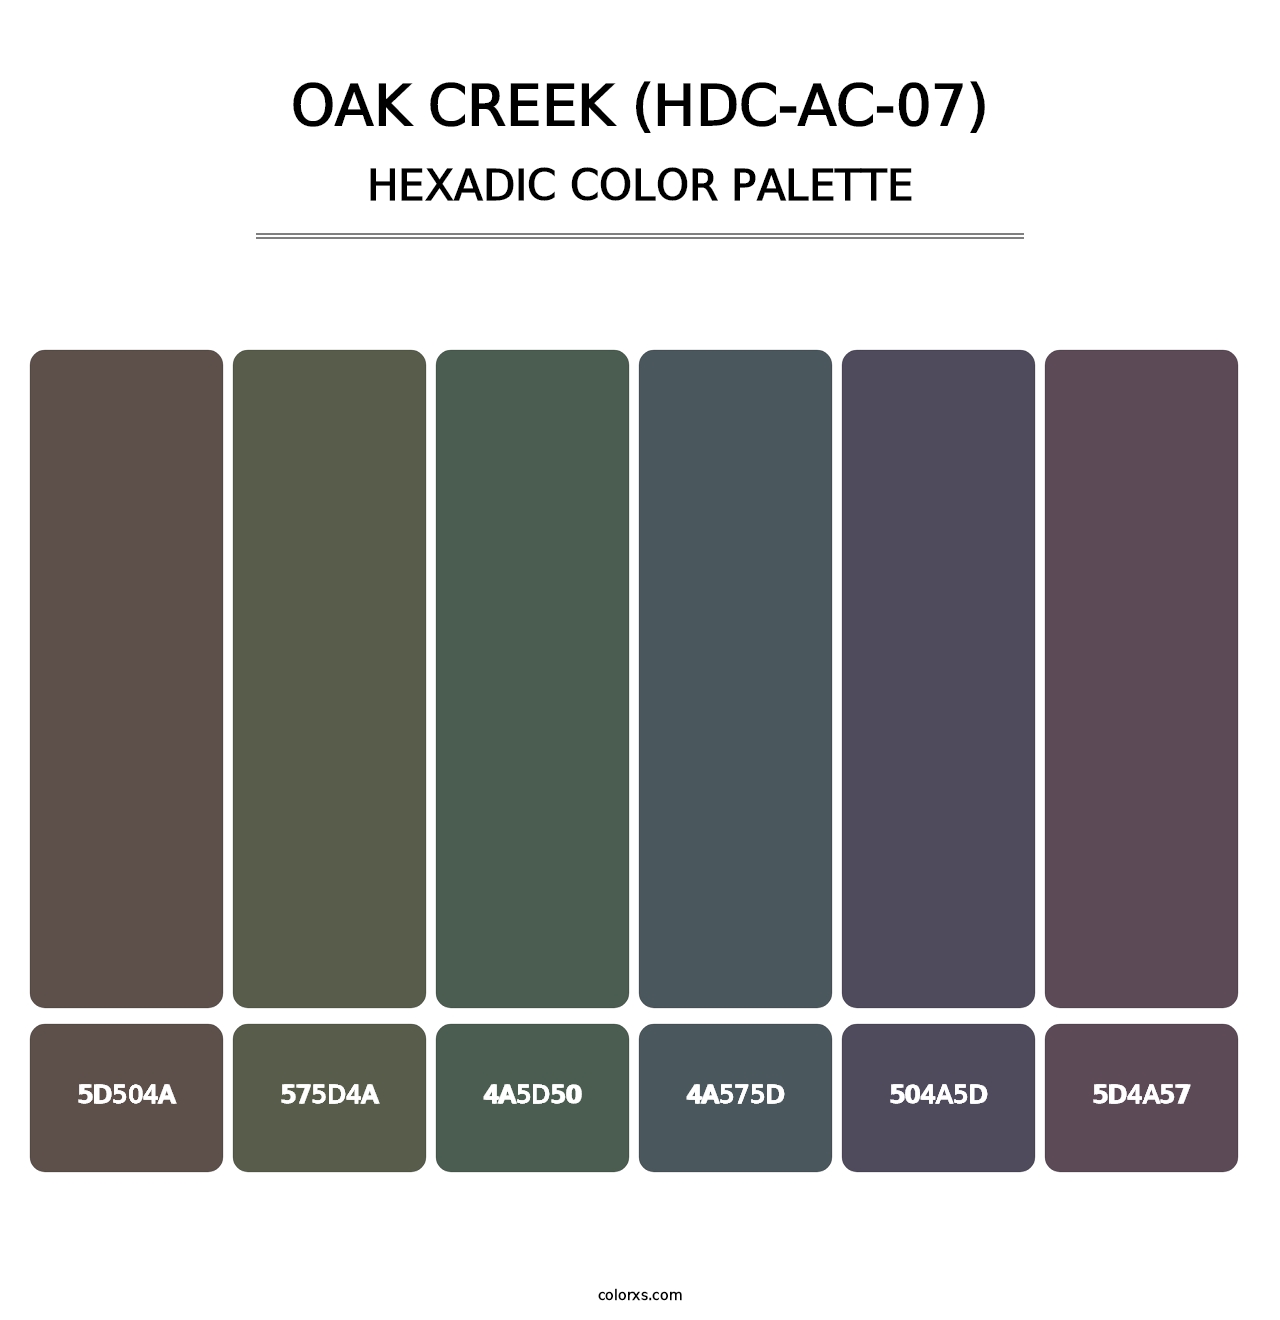 Oak Creek (HDC-AC-07) - Hexadic Color Palette